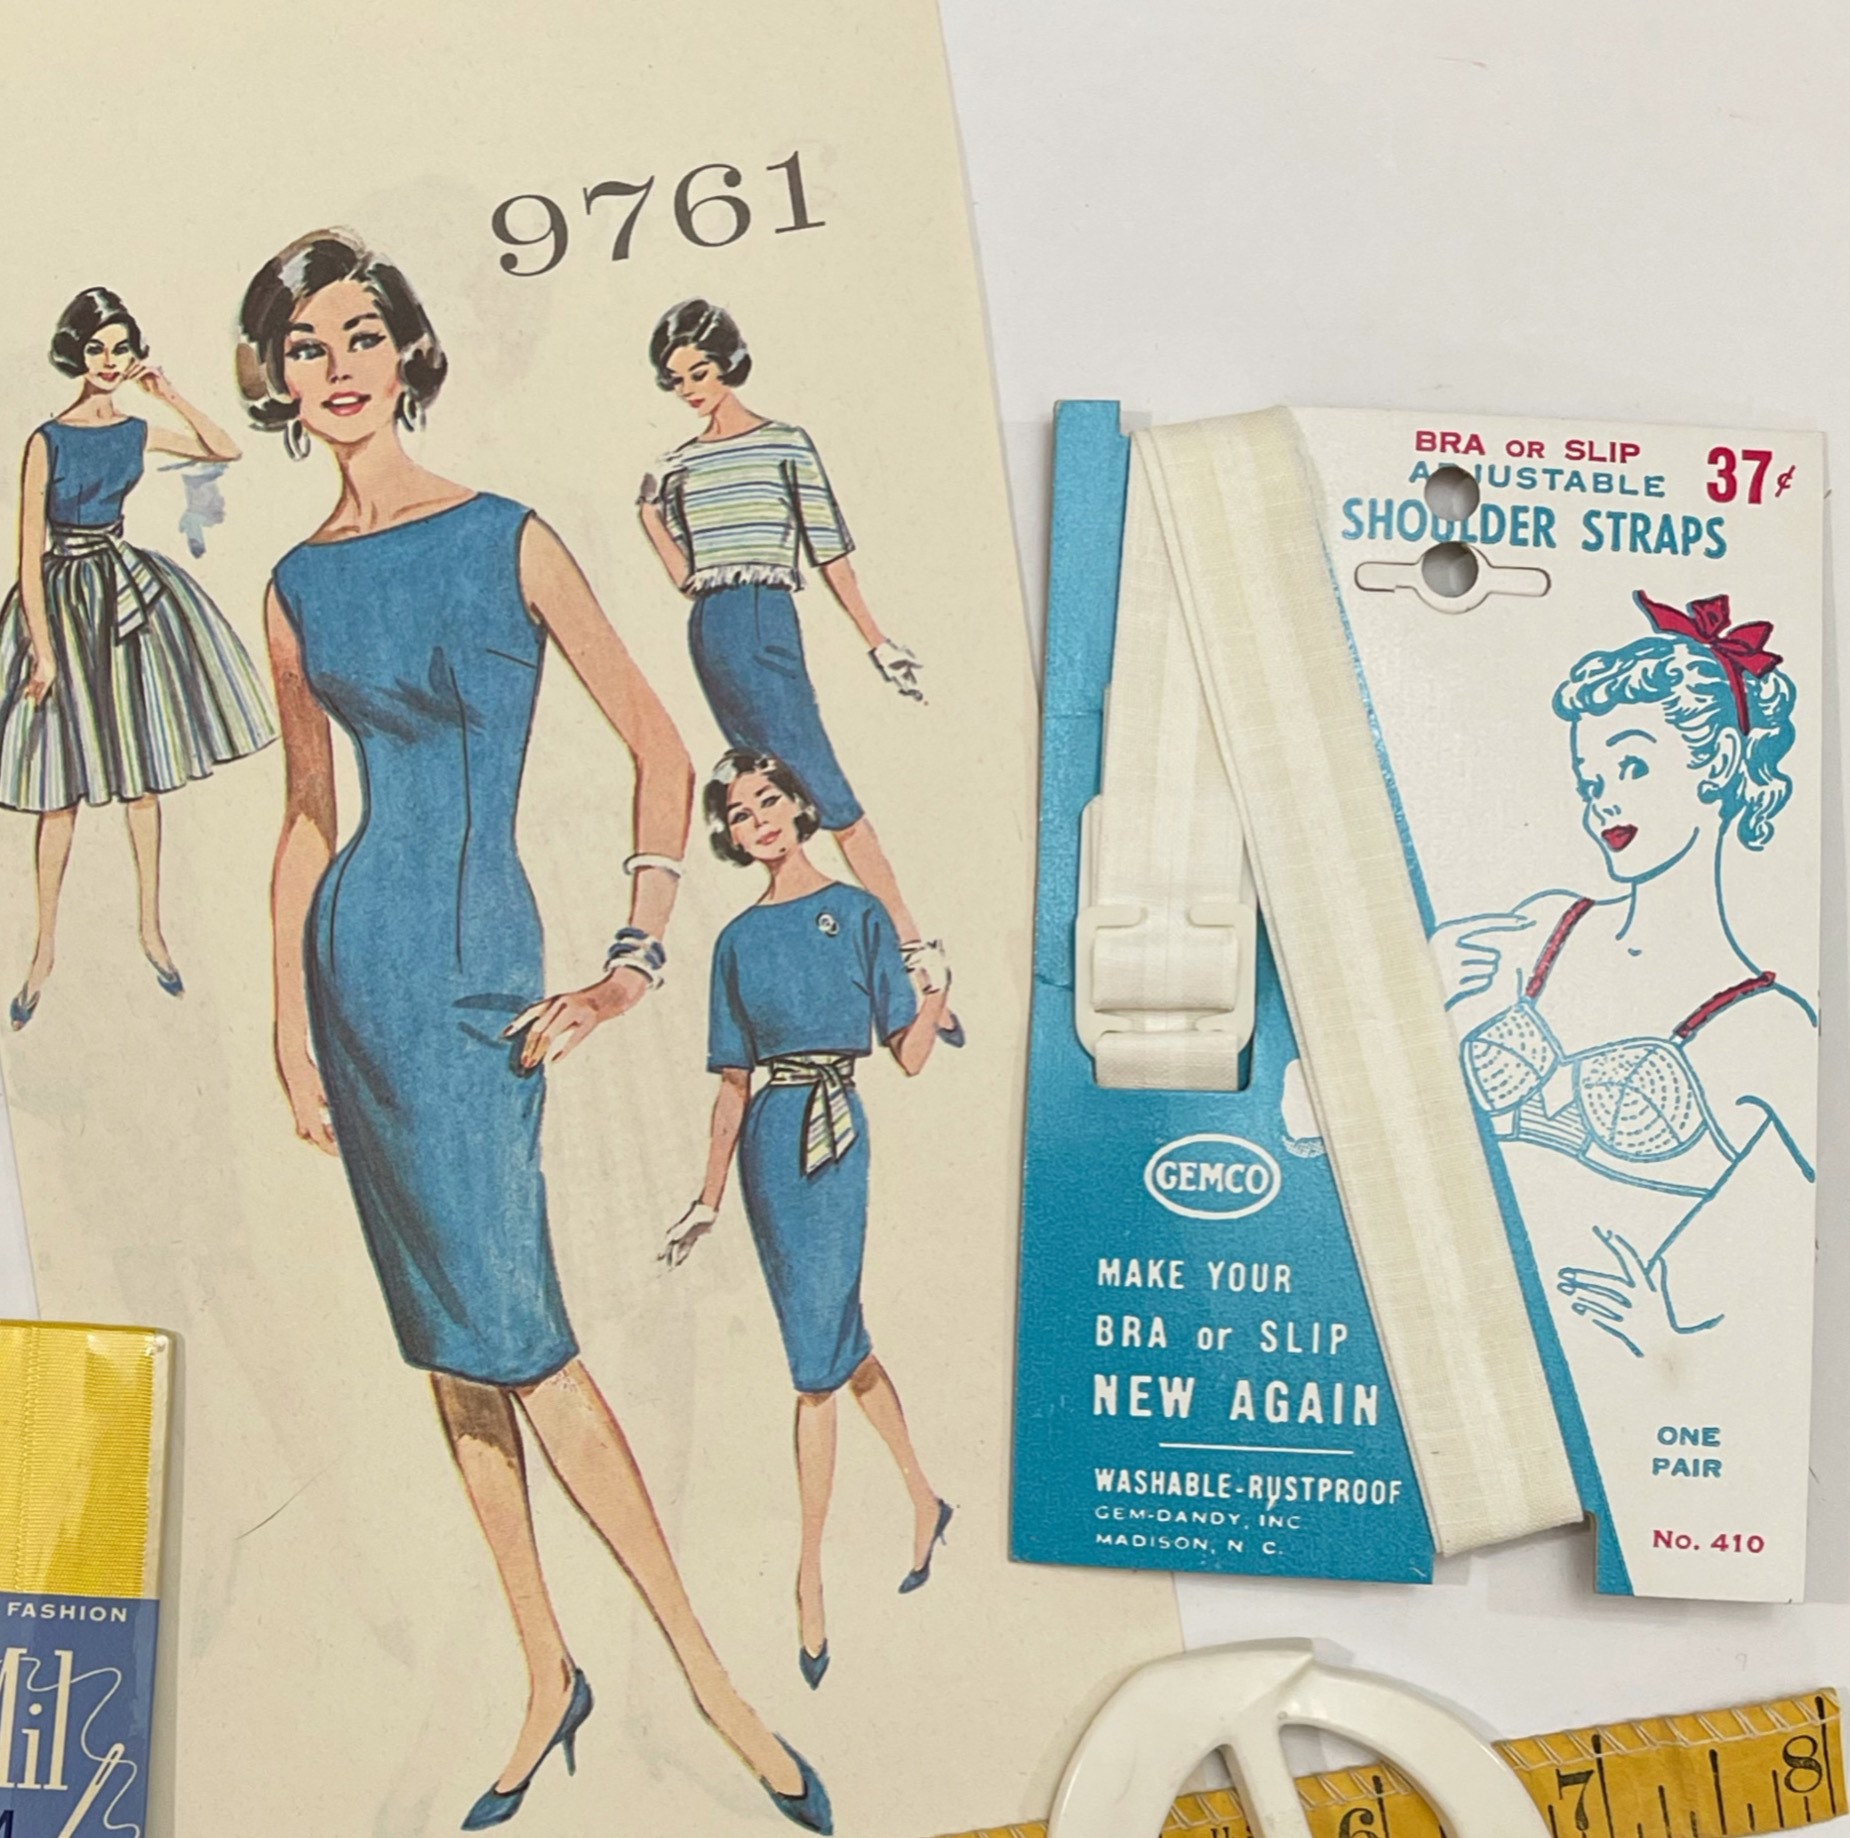 1964 Maidenform Bra Vintage Ad, Advertising Art, Magazine Ad